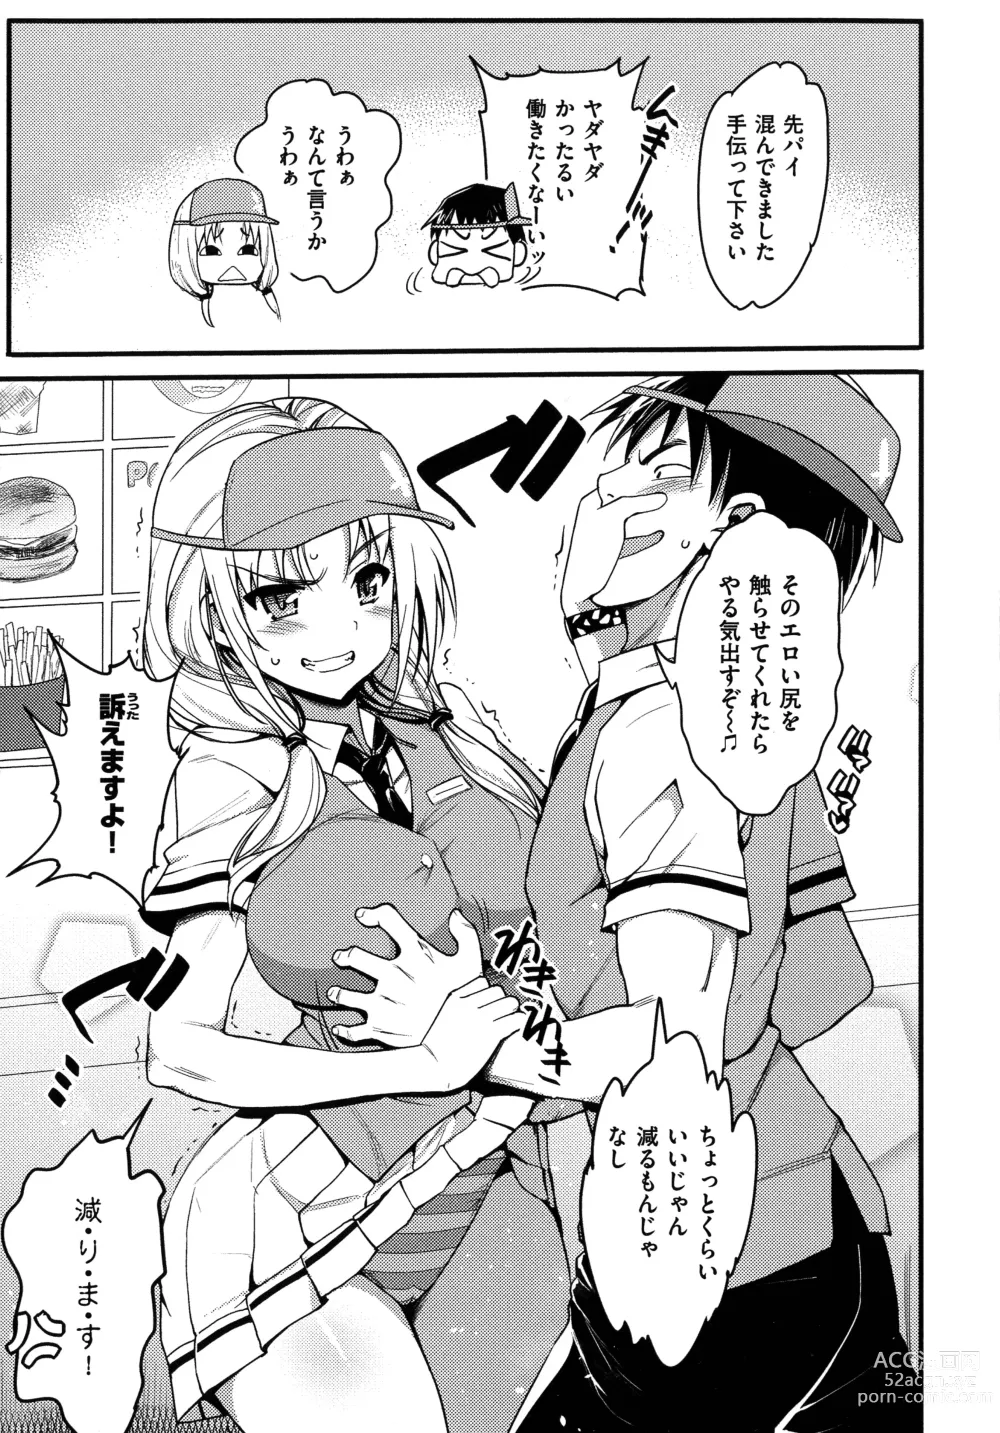 Page 200 of manga Muriyari Hametai